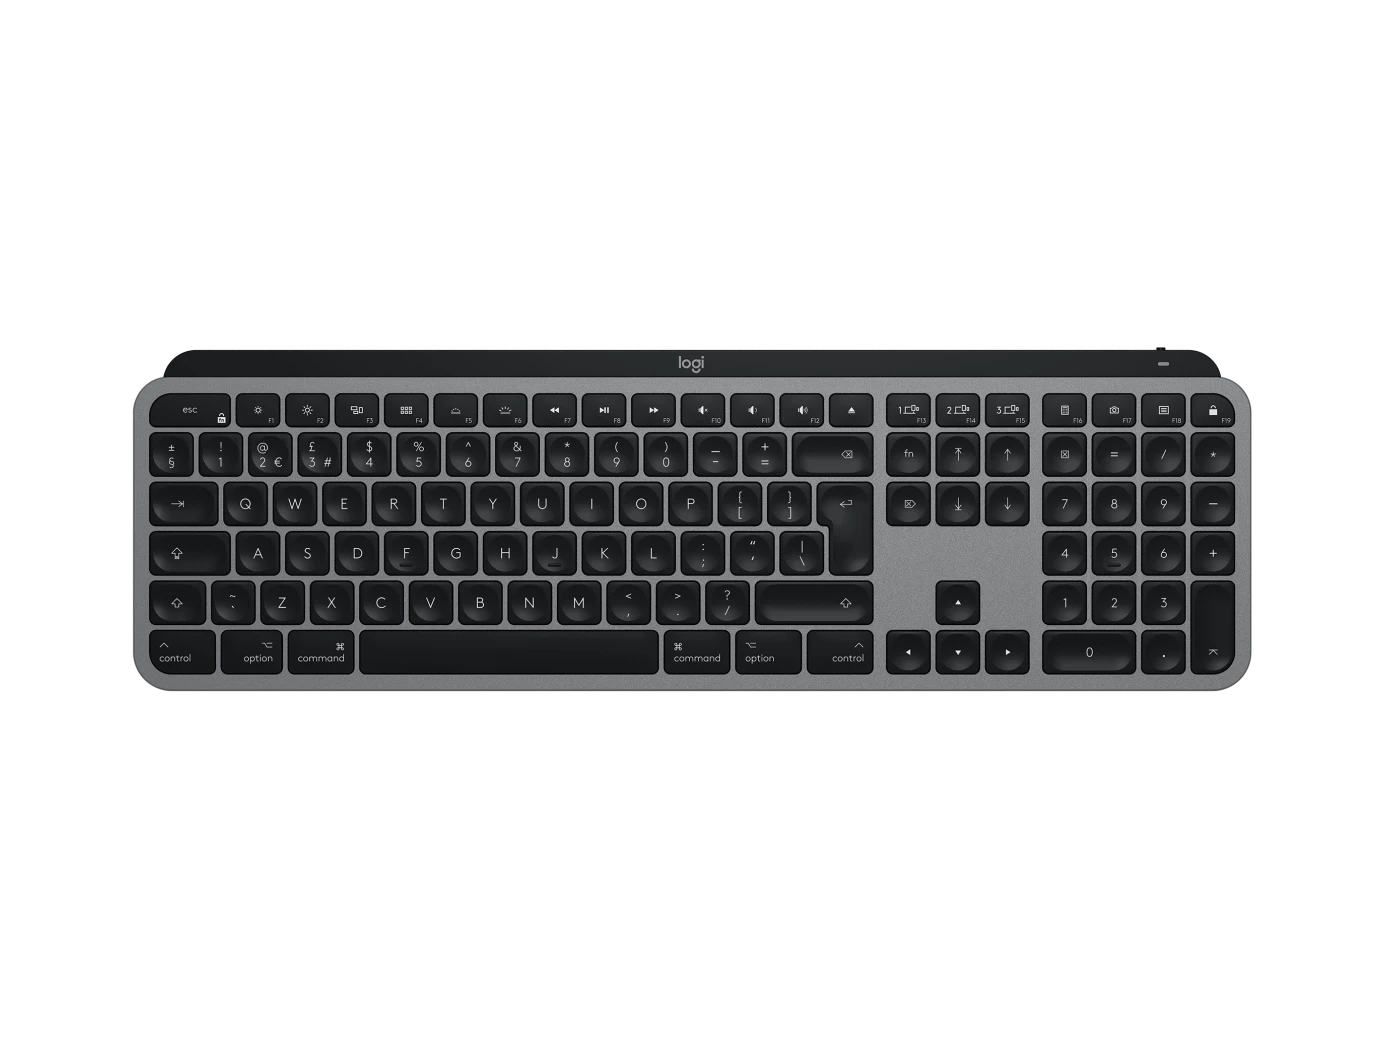 Logitech MX Keys Advanced For Mac Full-size Wireless Keyboard with Smart Illumination Keys - Space Grey